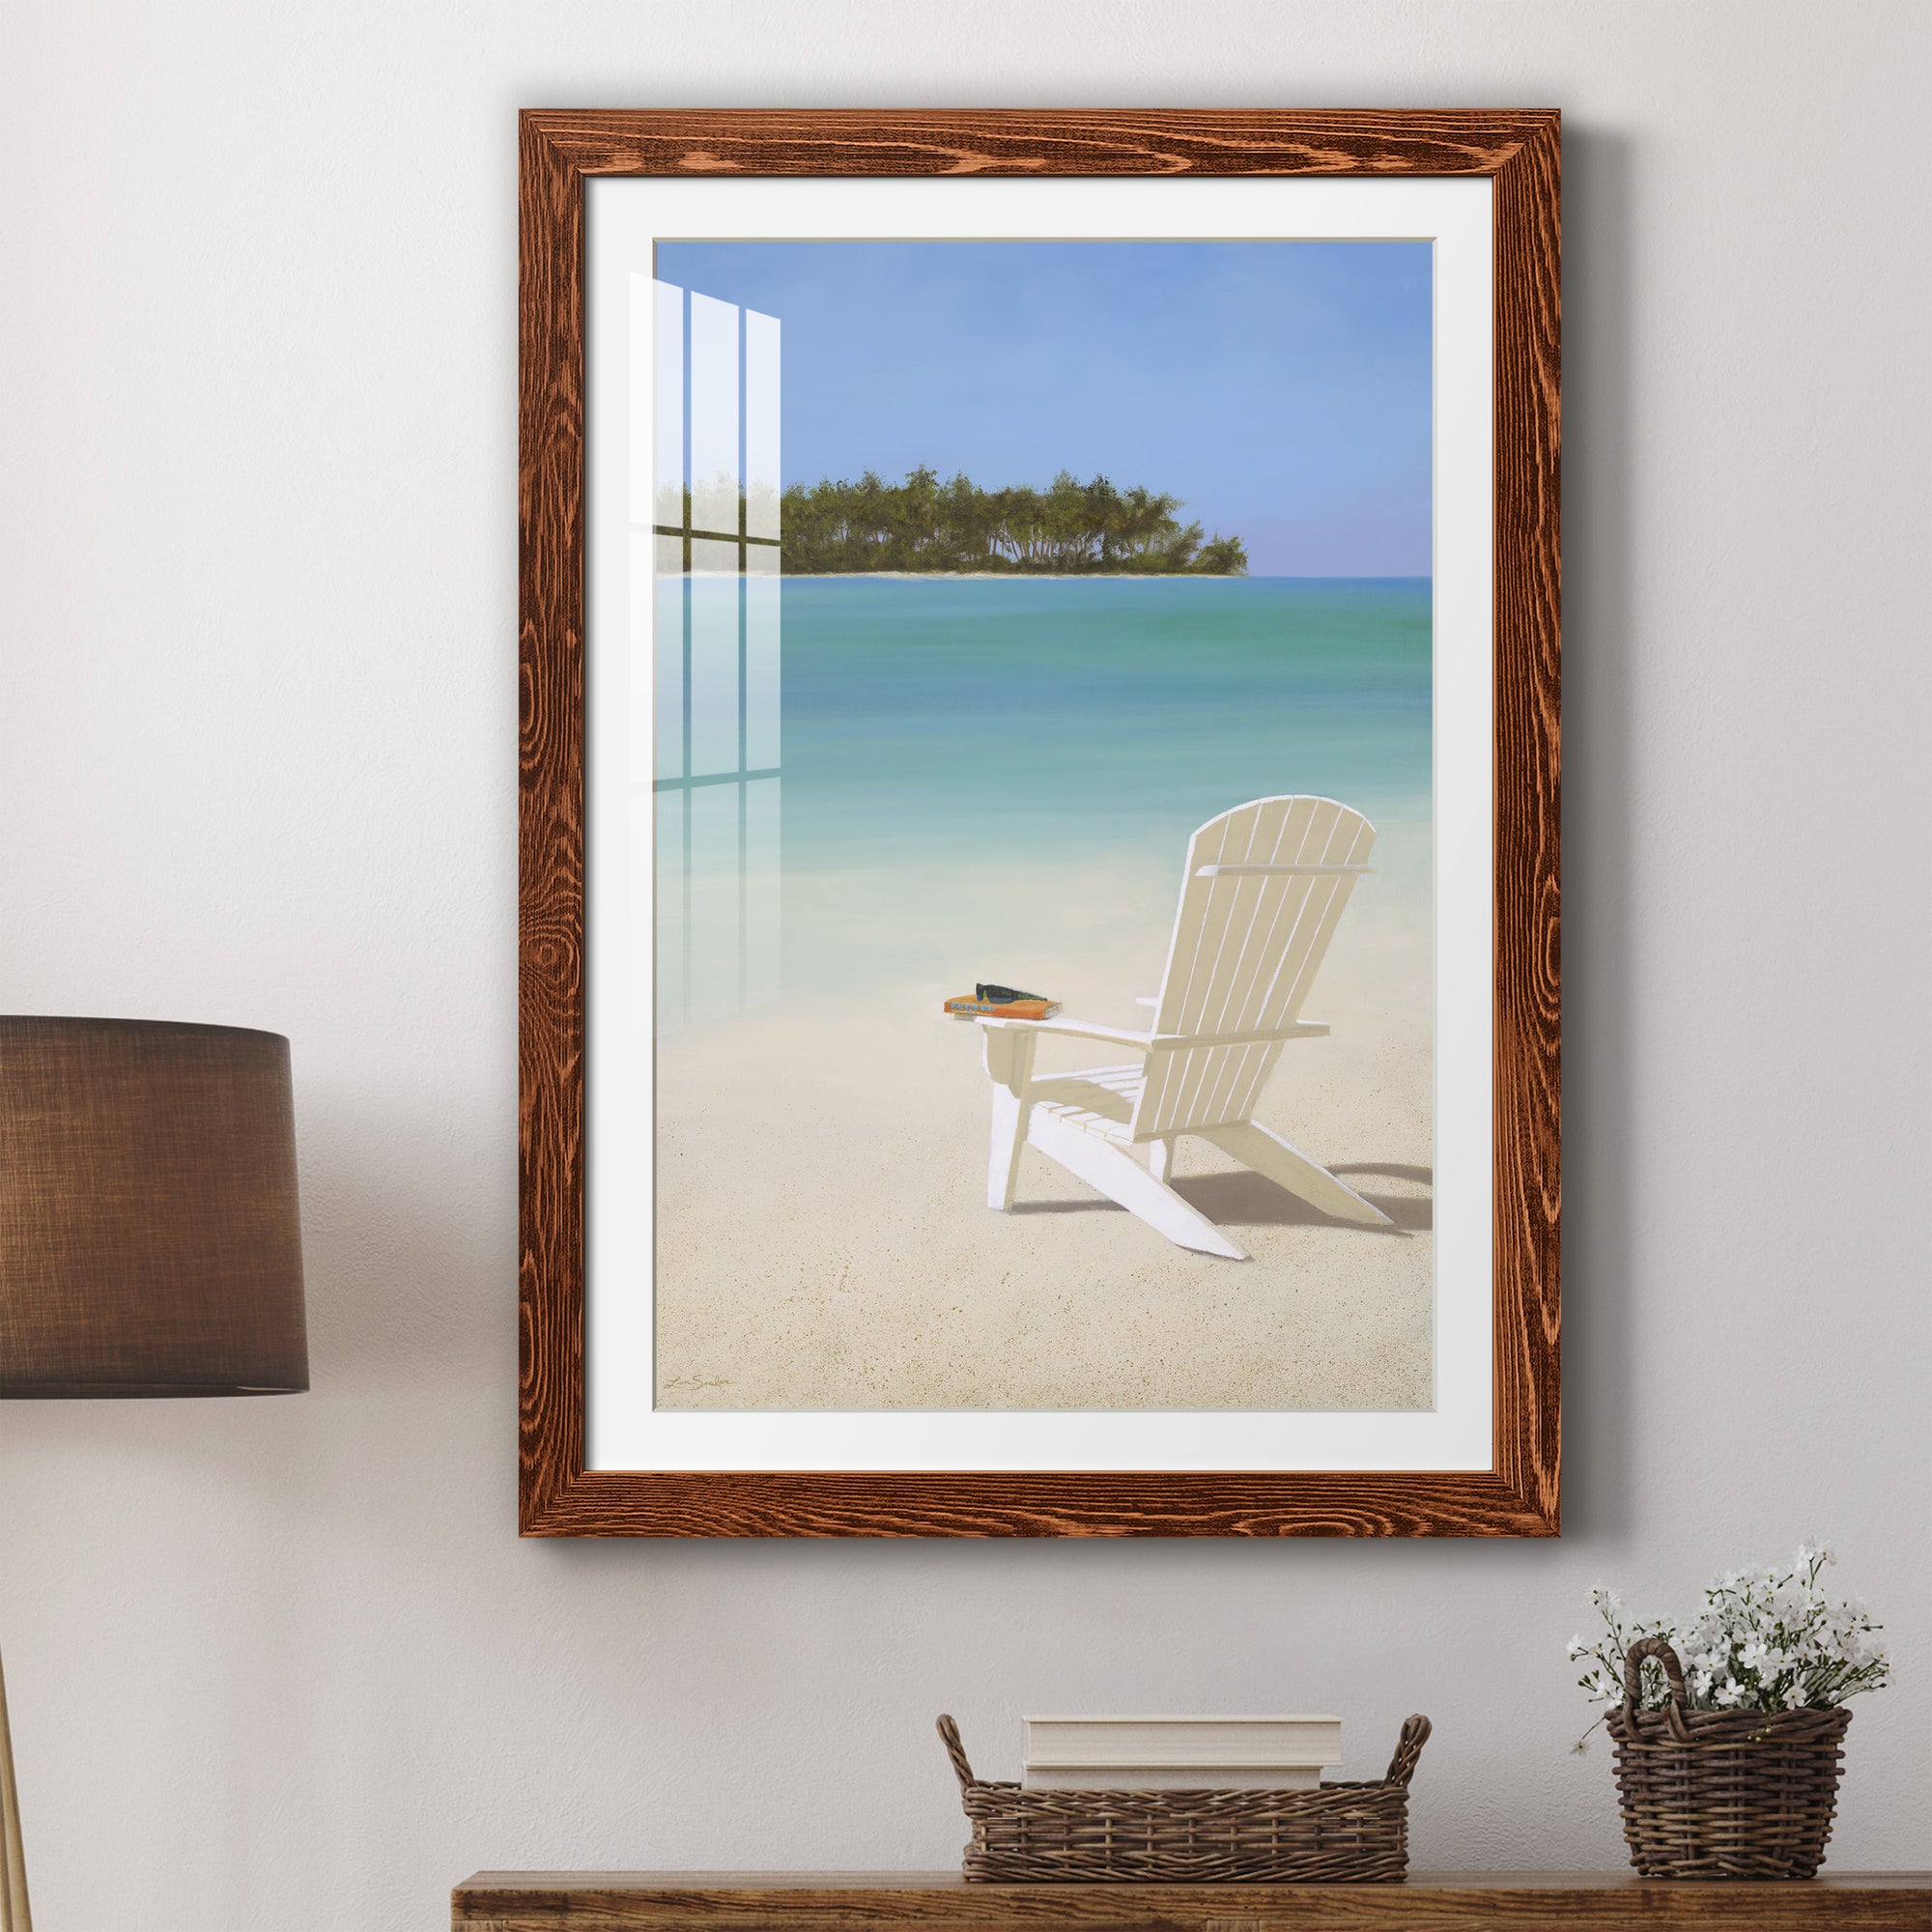 Beachfront Property - Premium Framed Print - Distressed Barnwood Frame - Ready to Hang